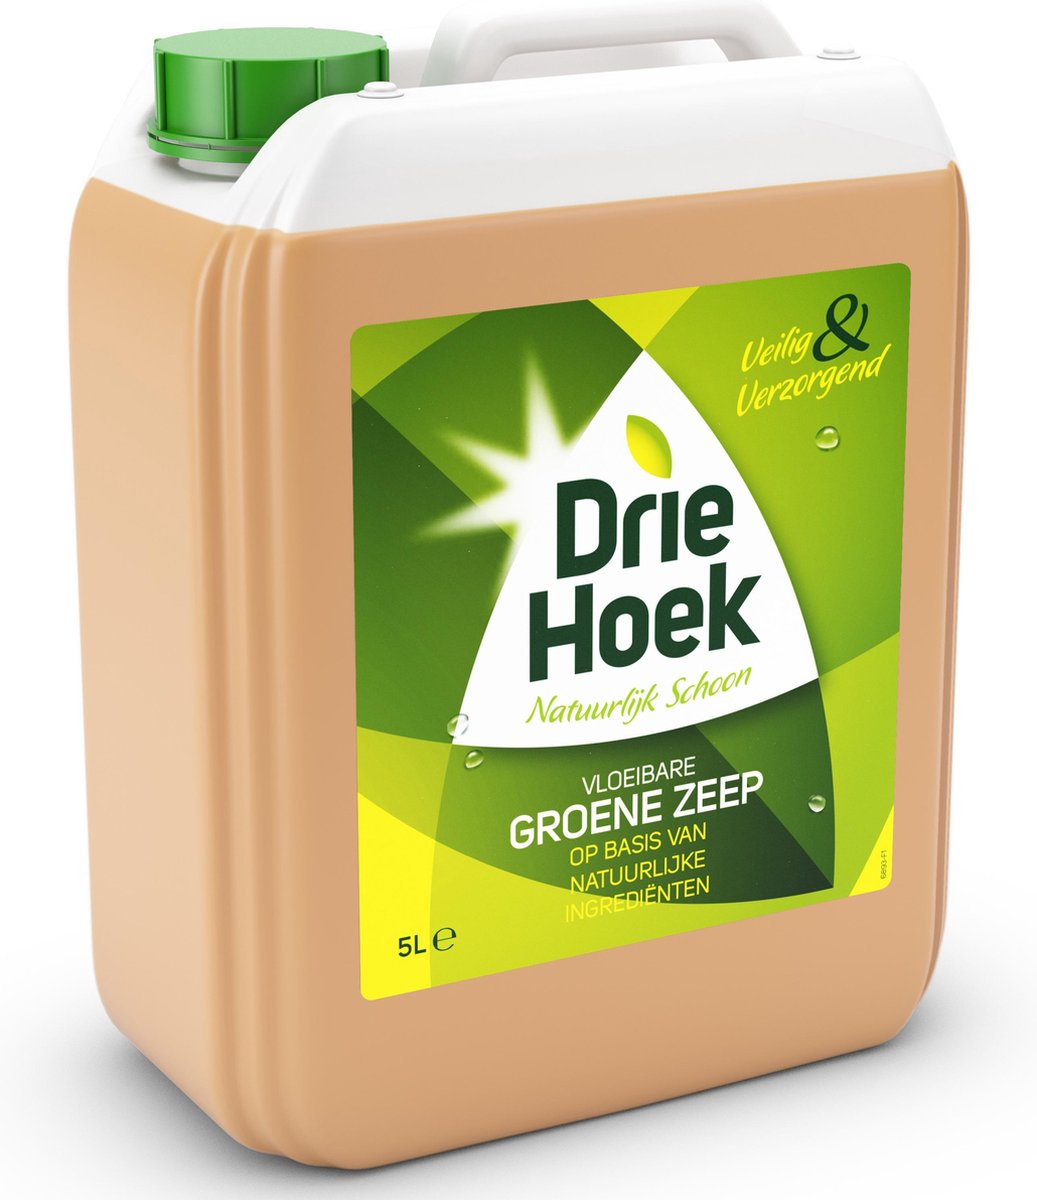 Wanorde Weggegooid markering Driehoek - Vloeibare Groene Zeep - 5 liter | bol.com